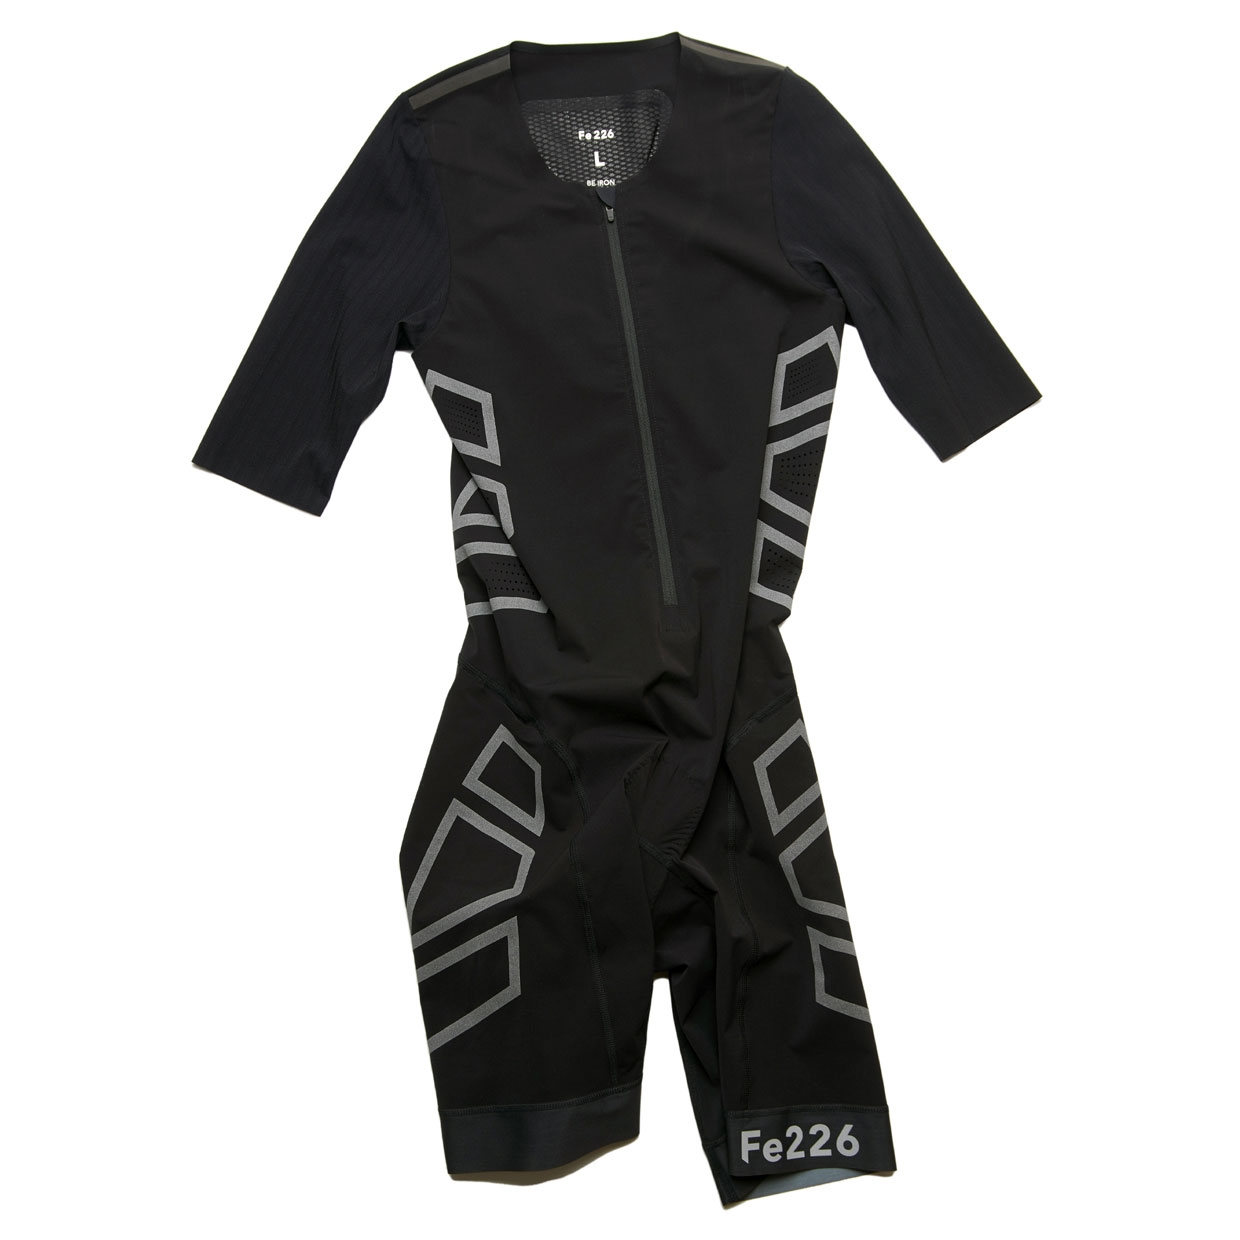 Herren Triathloneinteiler AeroForce Sleeved Tri Suit